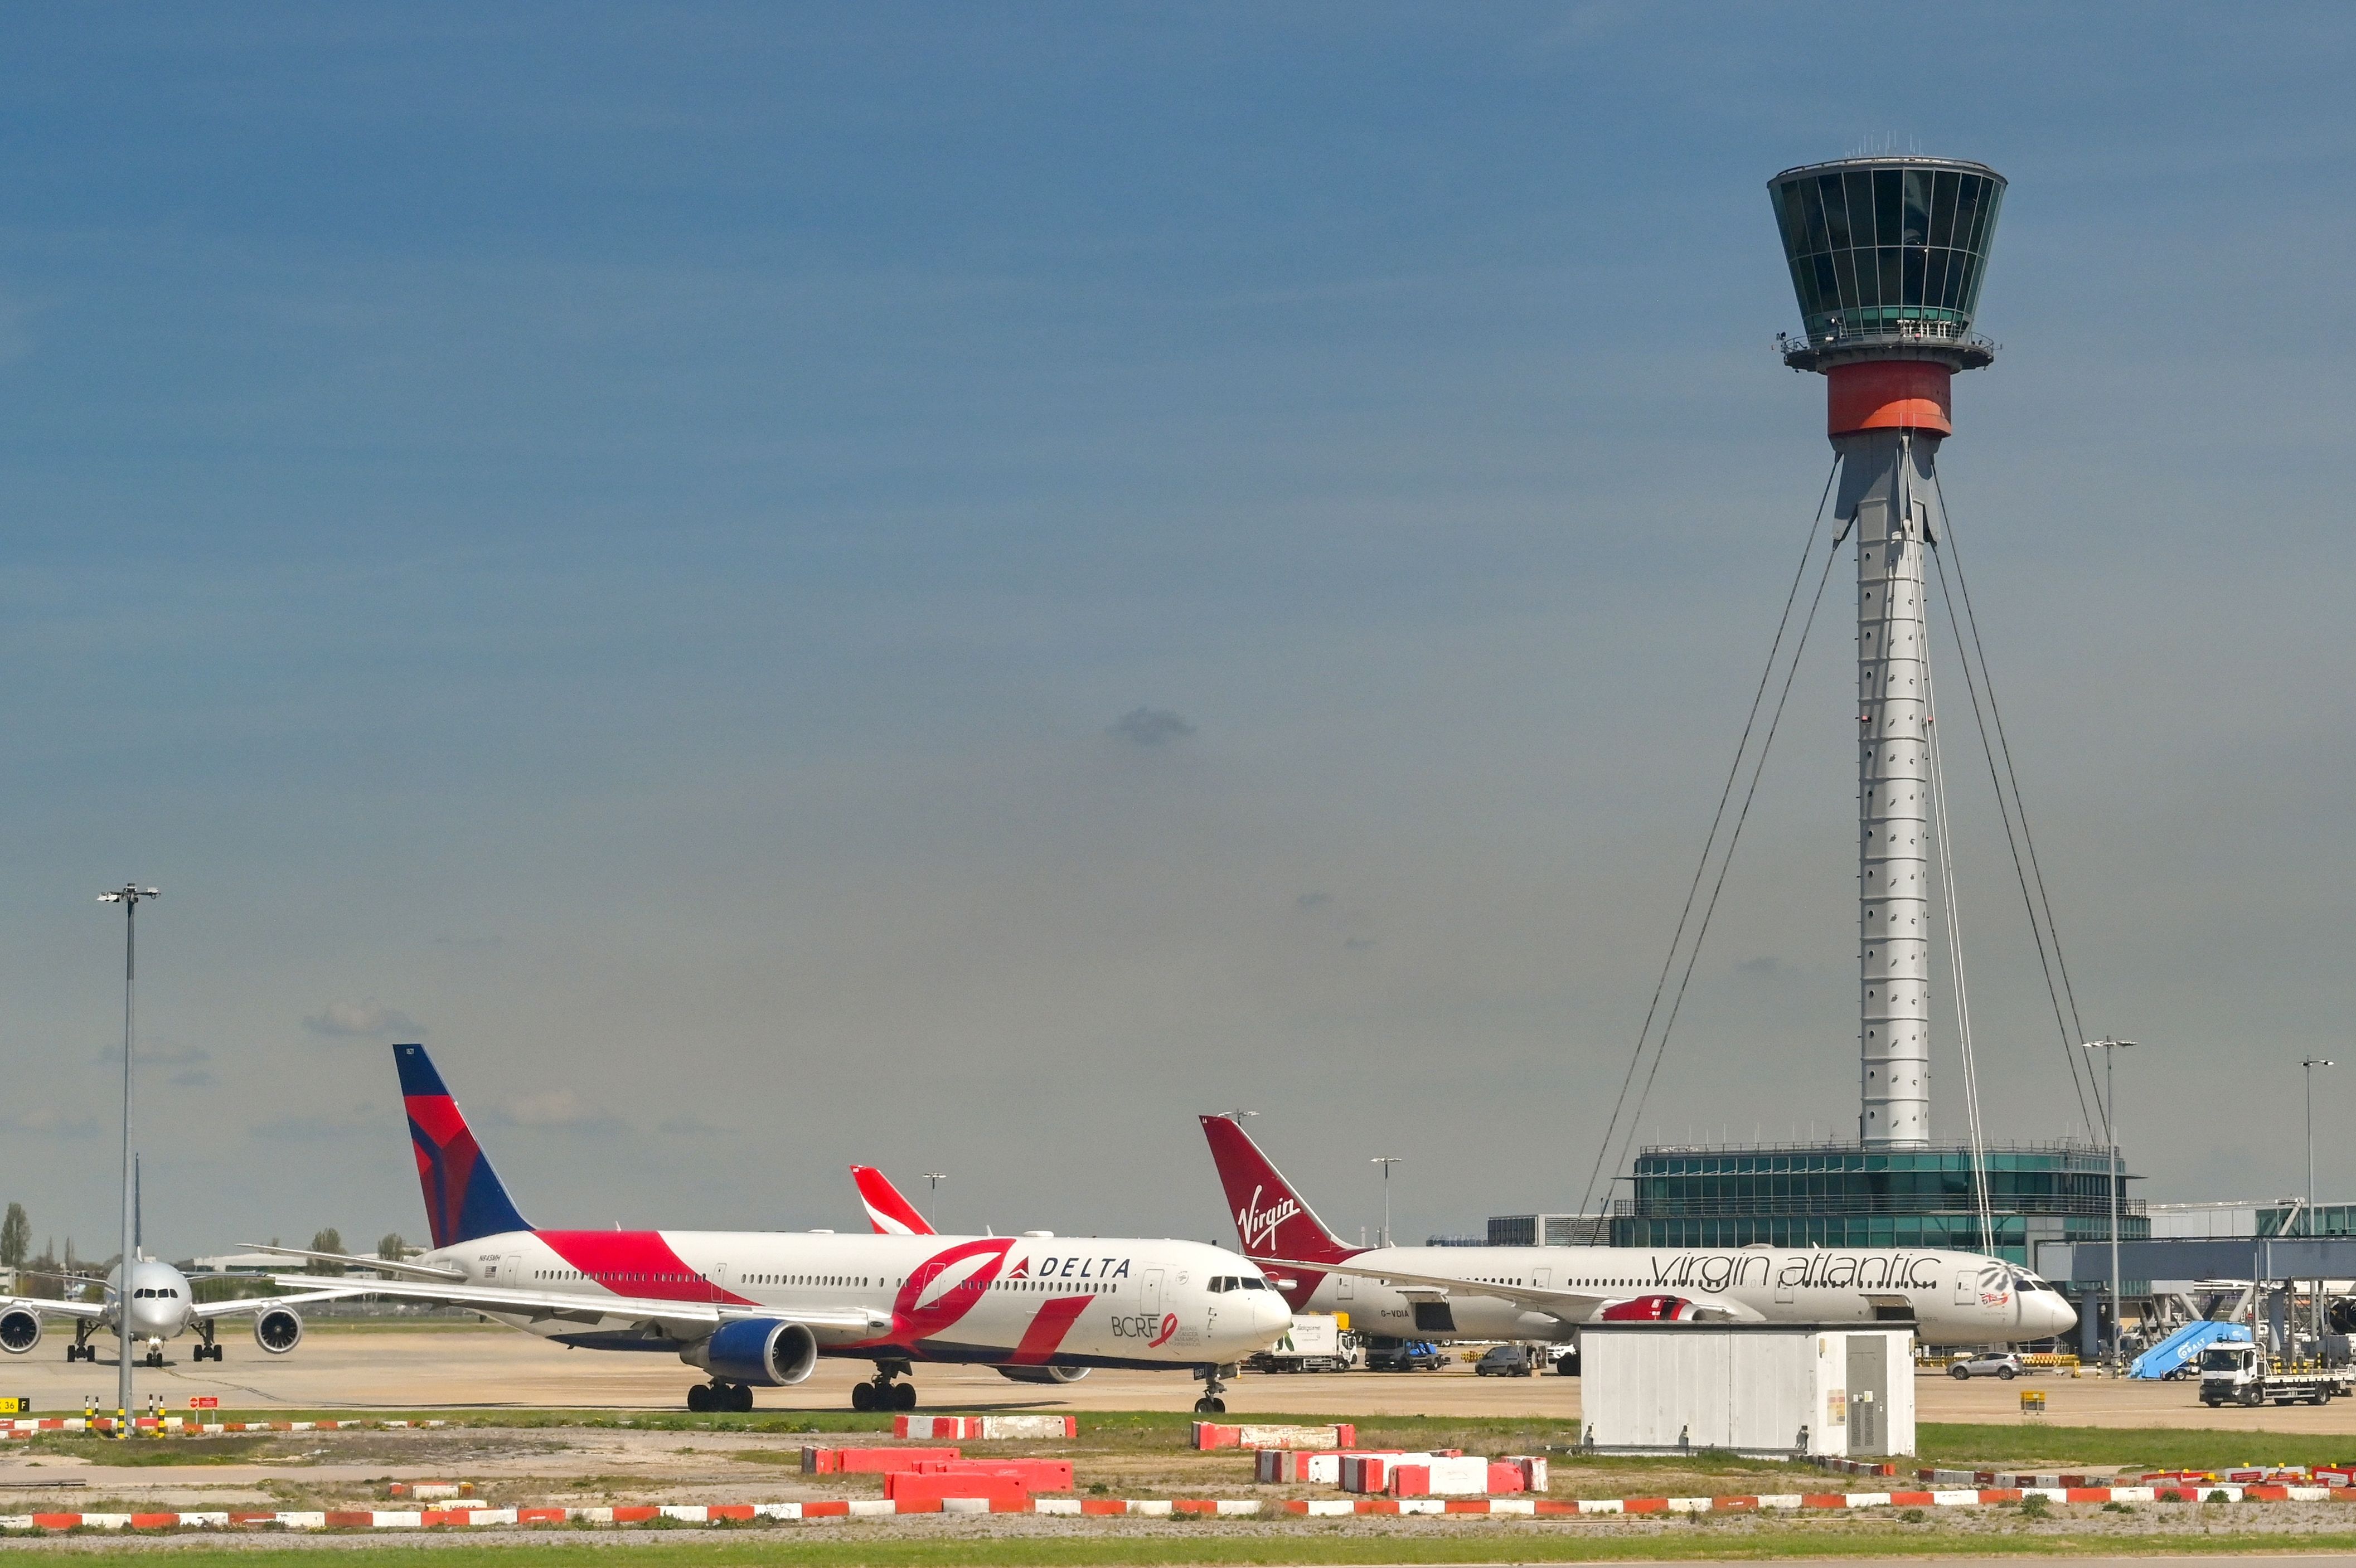 London Heathrow Airport Planes & Tower